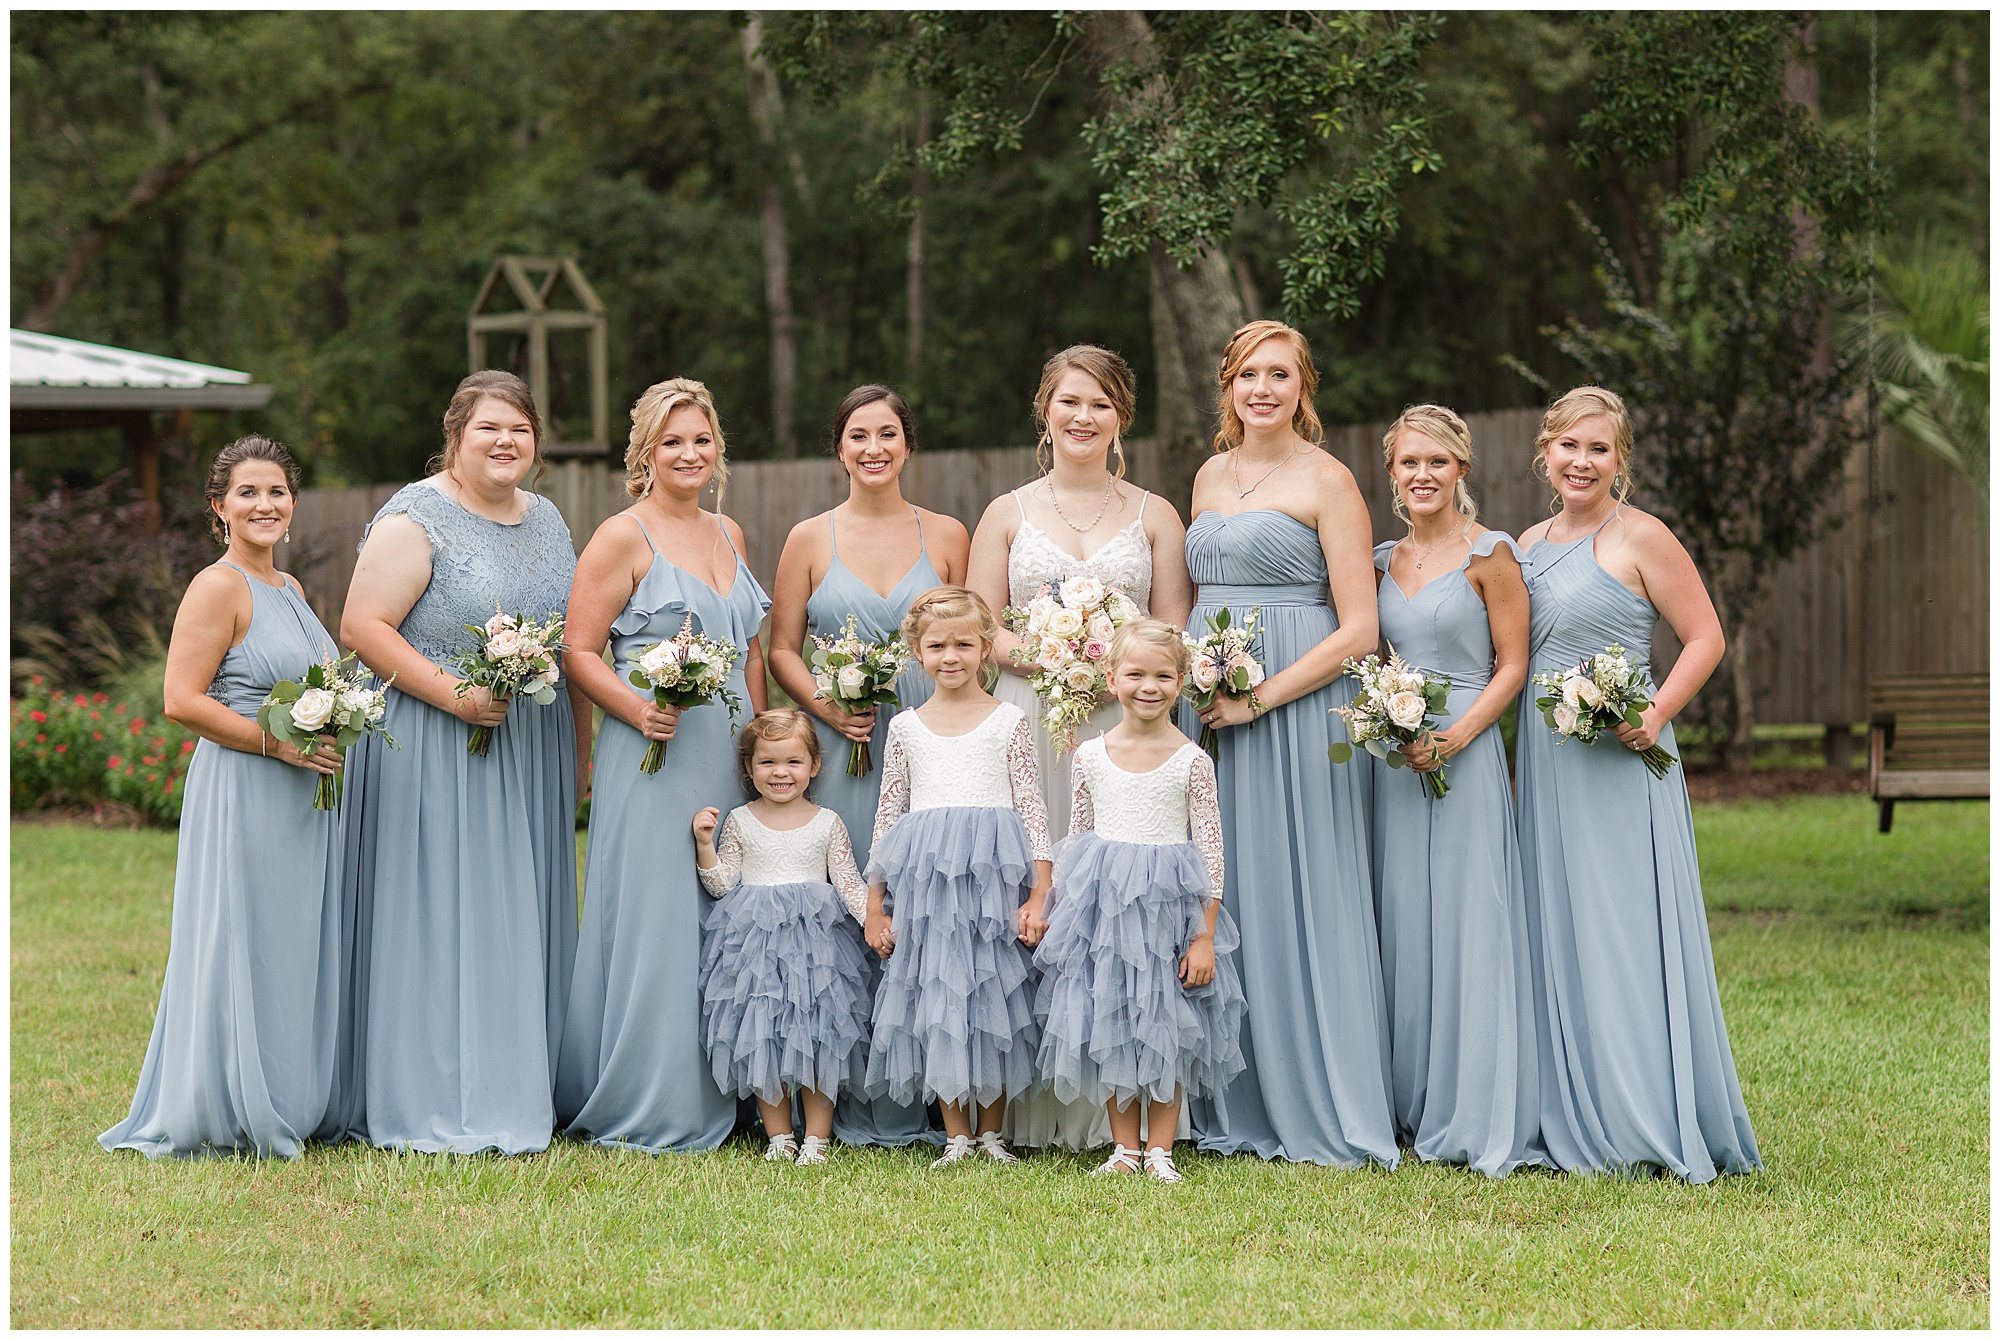 Kelley Stinson Photography,Lewiswood Farm Wedding,Florida Wedding Photographer,Tallahassee Wedding Photographer,South Georgia Wedding,